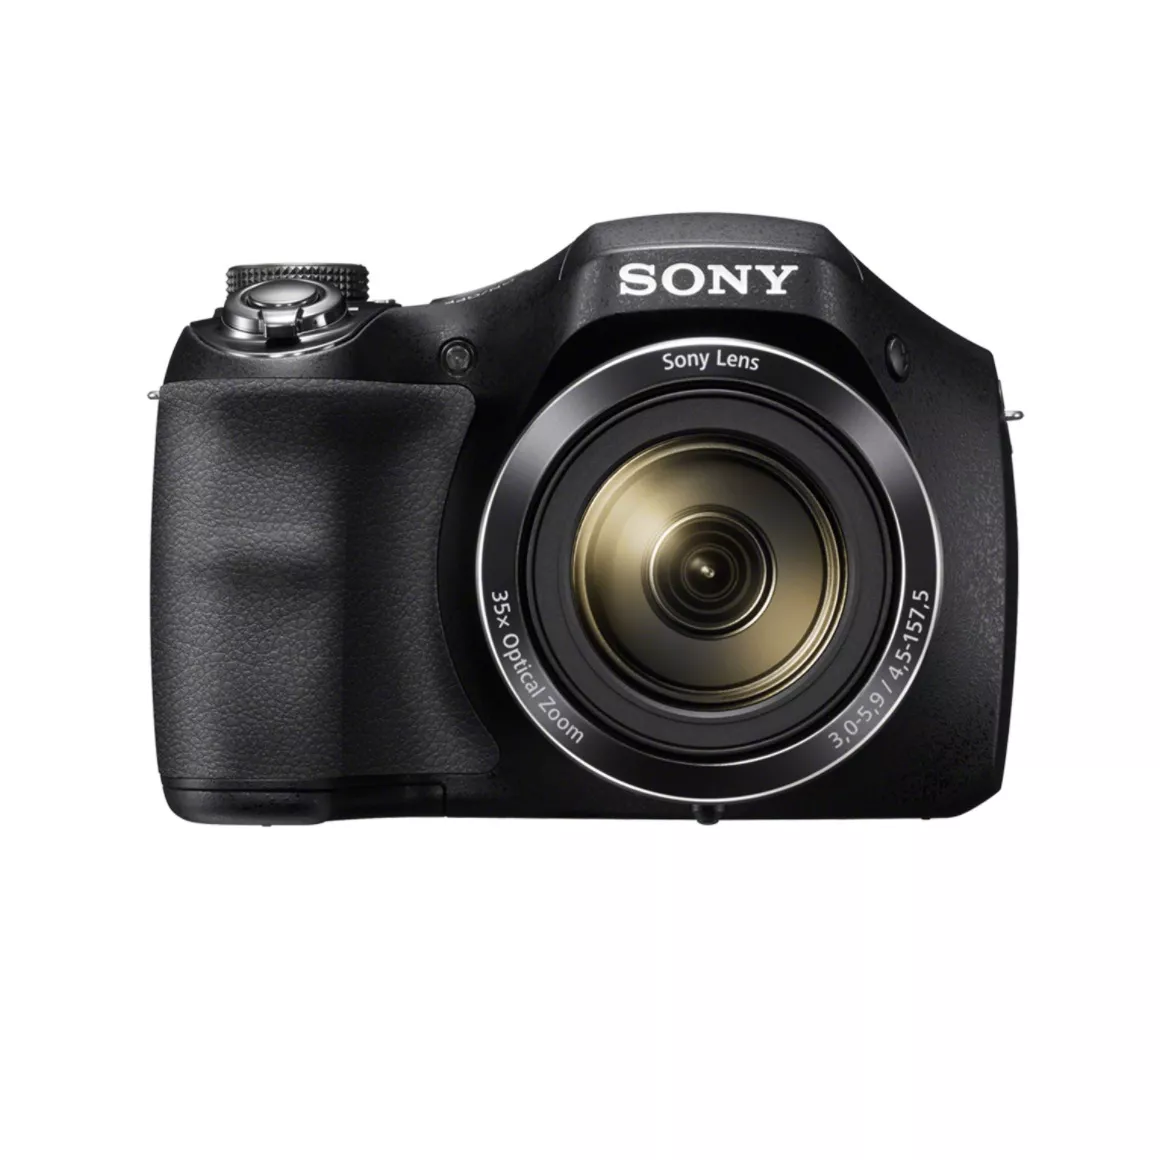  Sony Cyber-shot H300 Dsc-h300 Compacta Avanzada Color Negro 